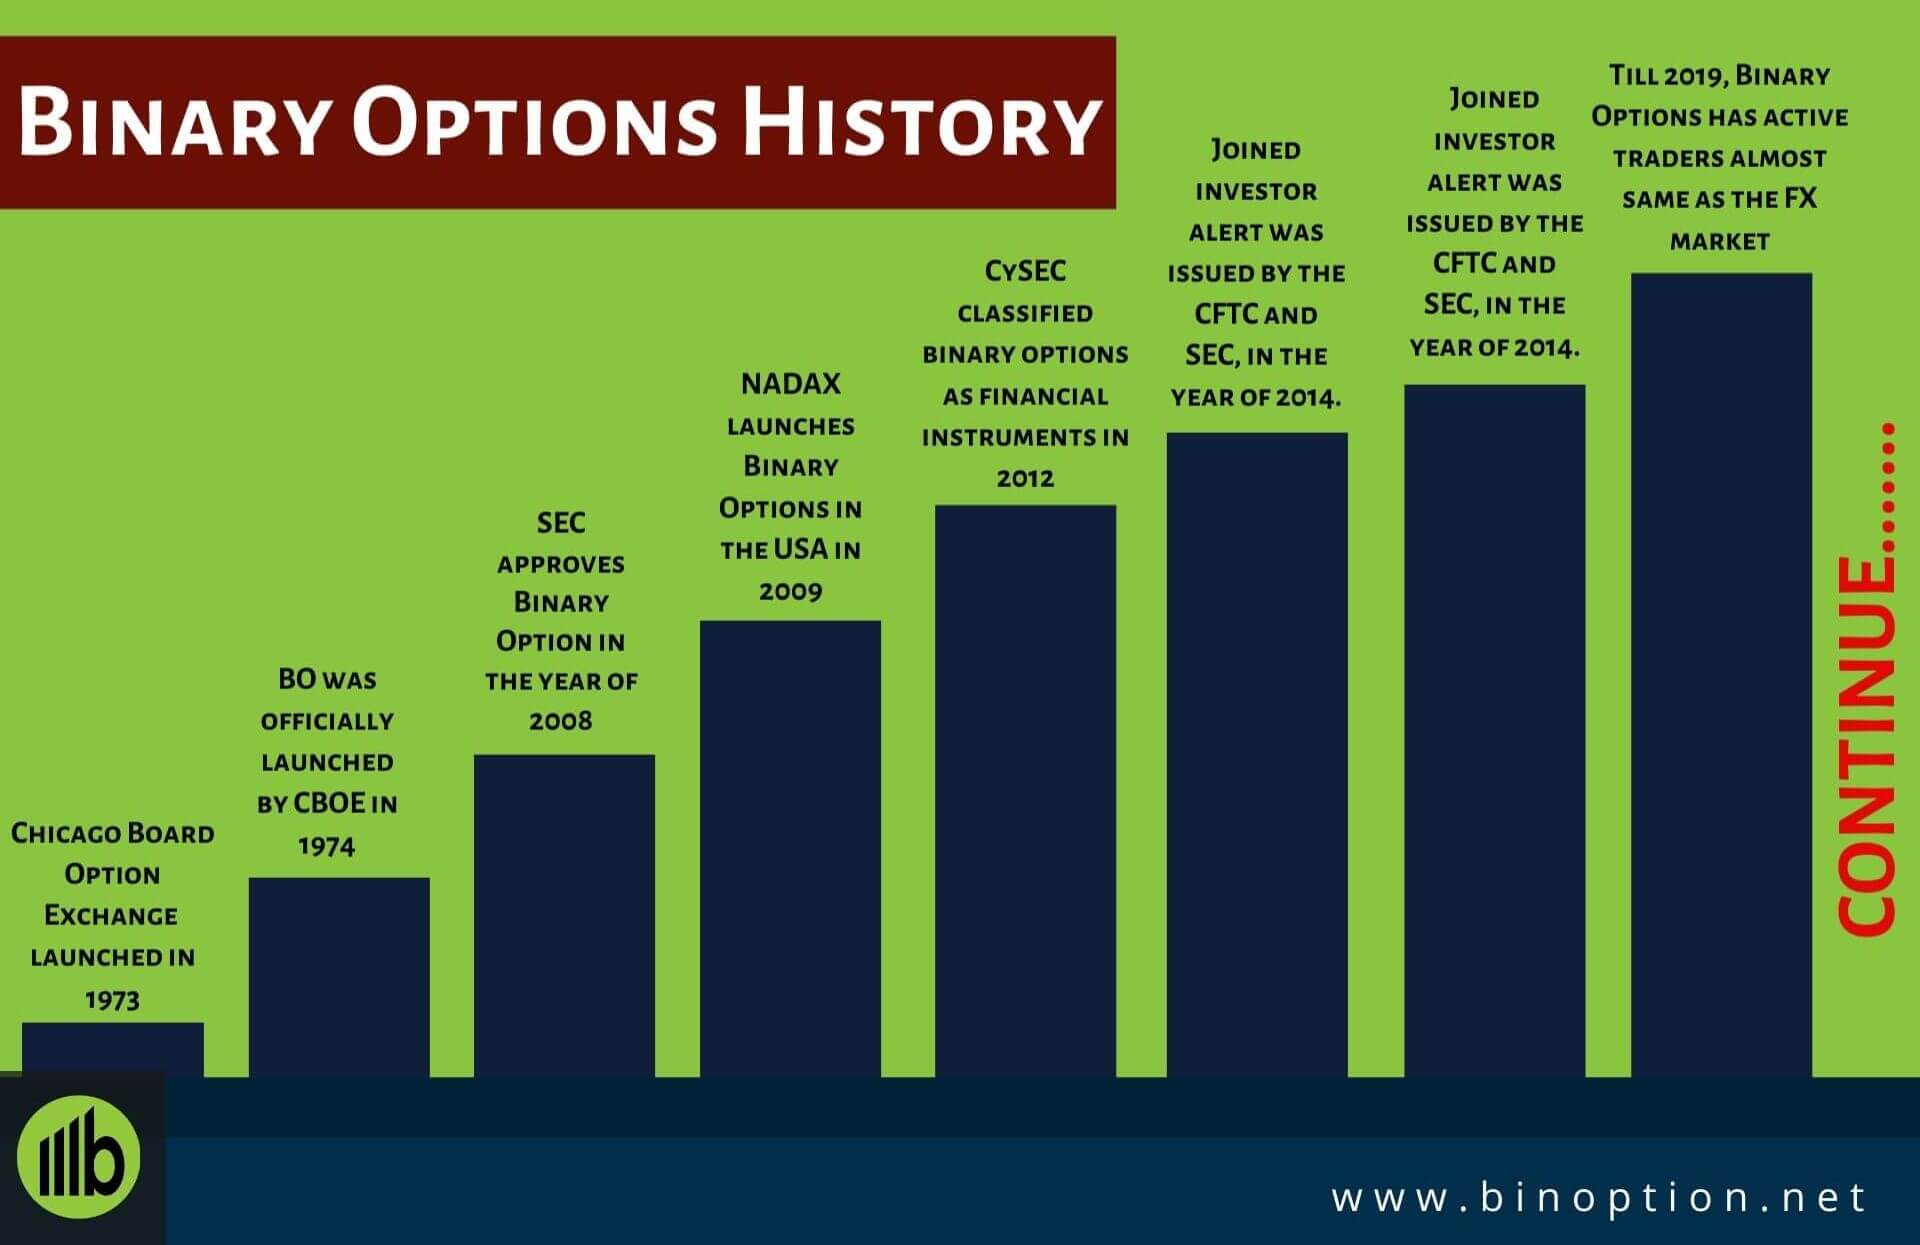 Binary options in 2020